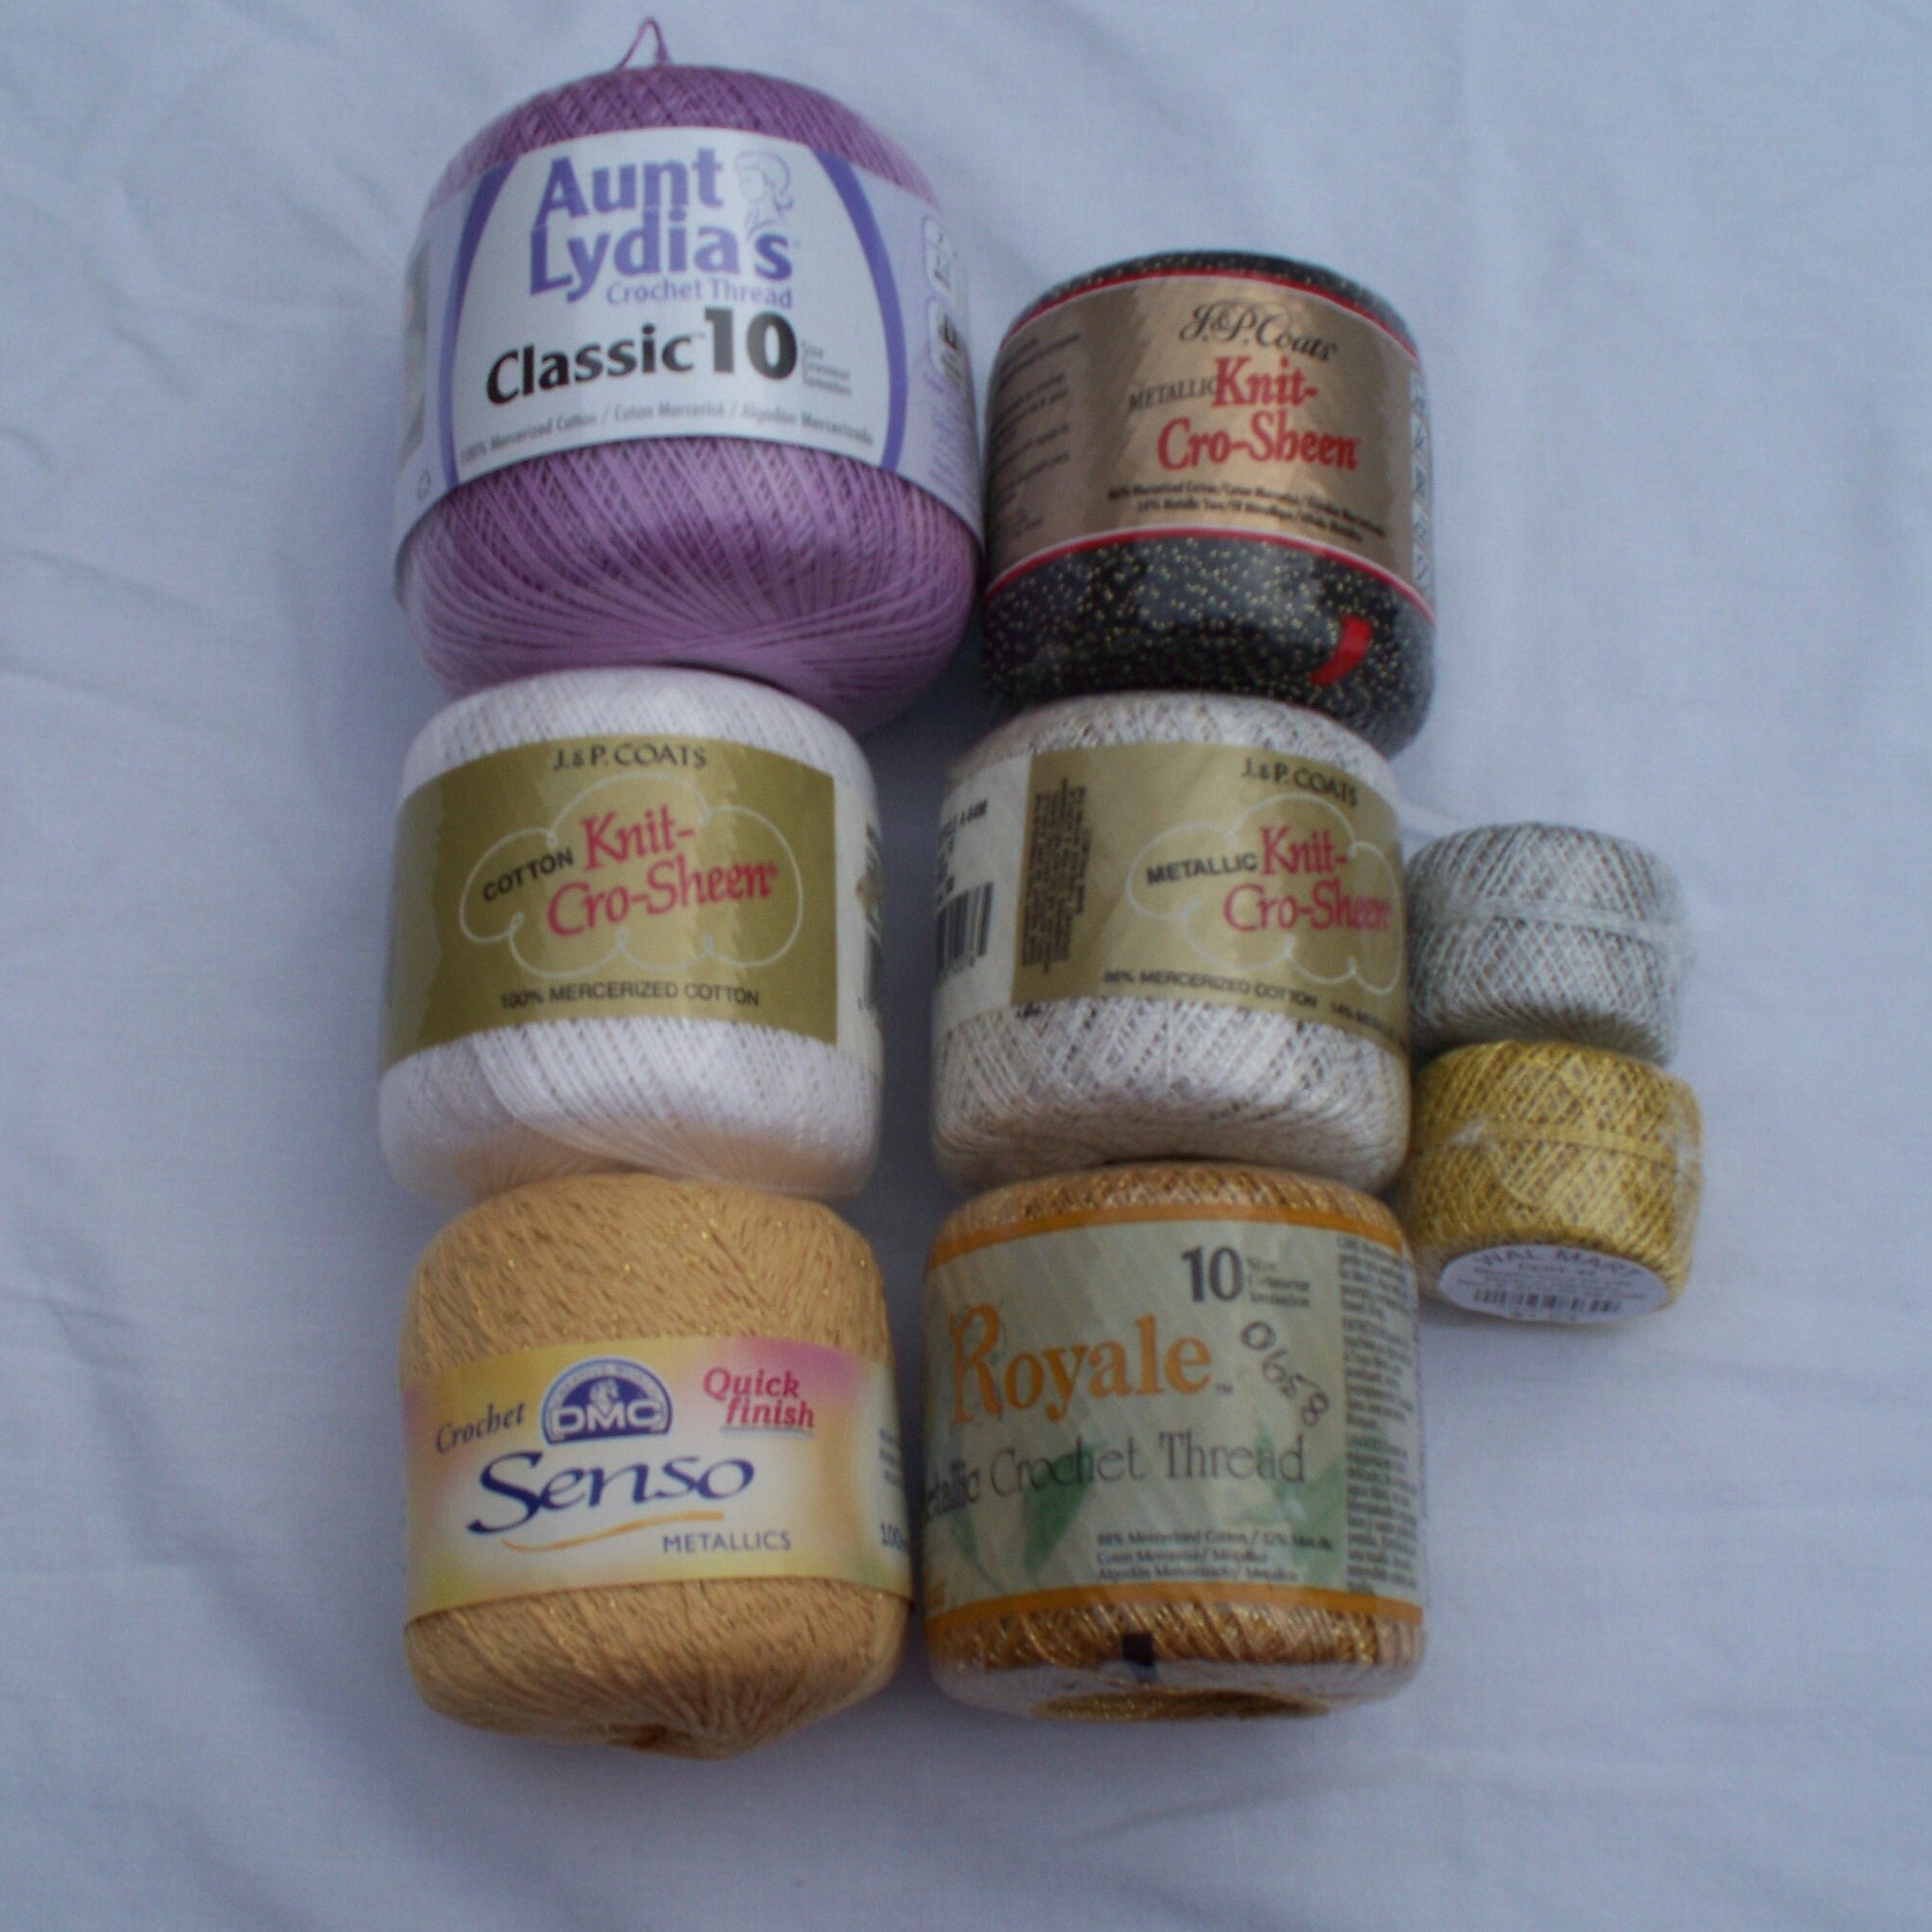 Crochet Thread Size 8, Embroidery Thread, Cotton Yarn Skeins, Fine